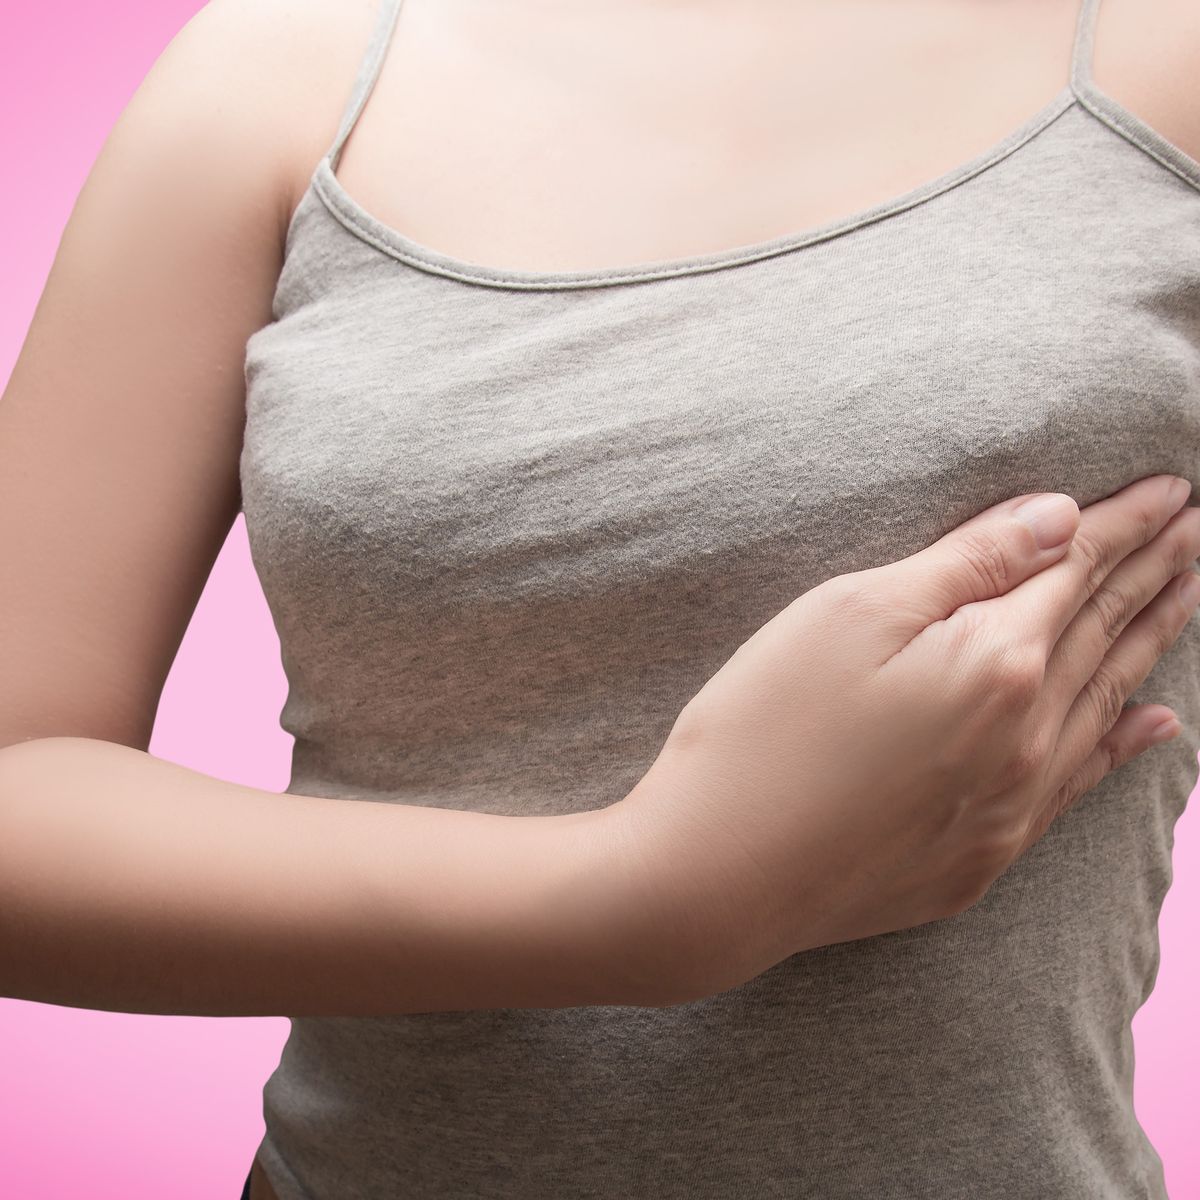 Causes of Nipple Pain